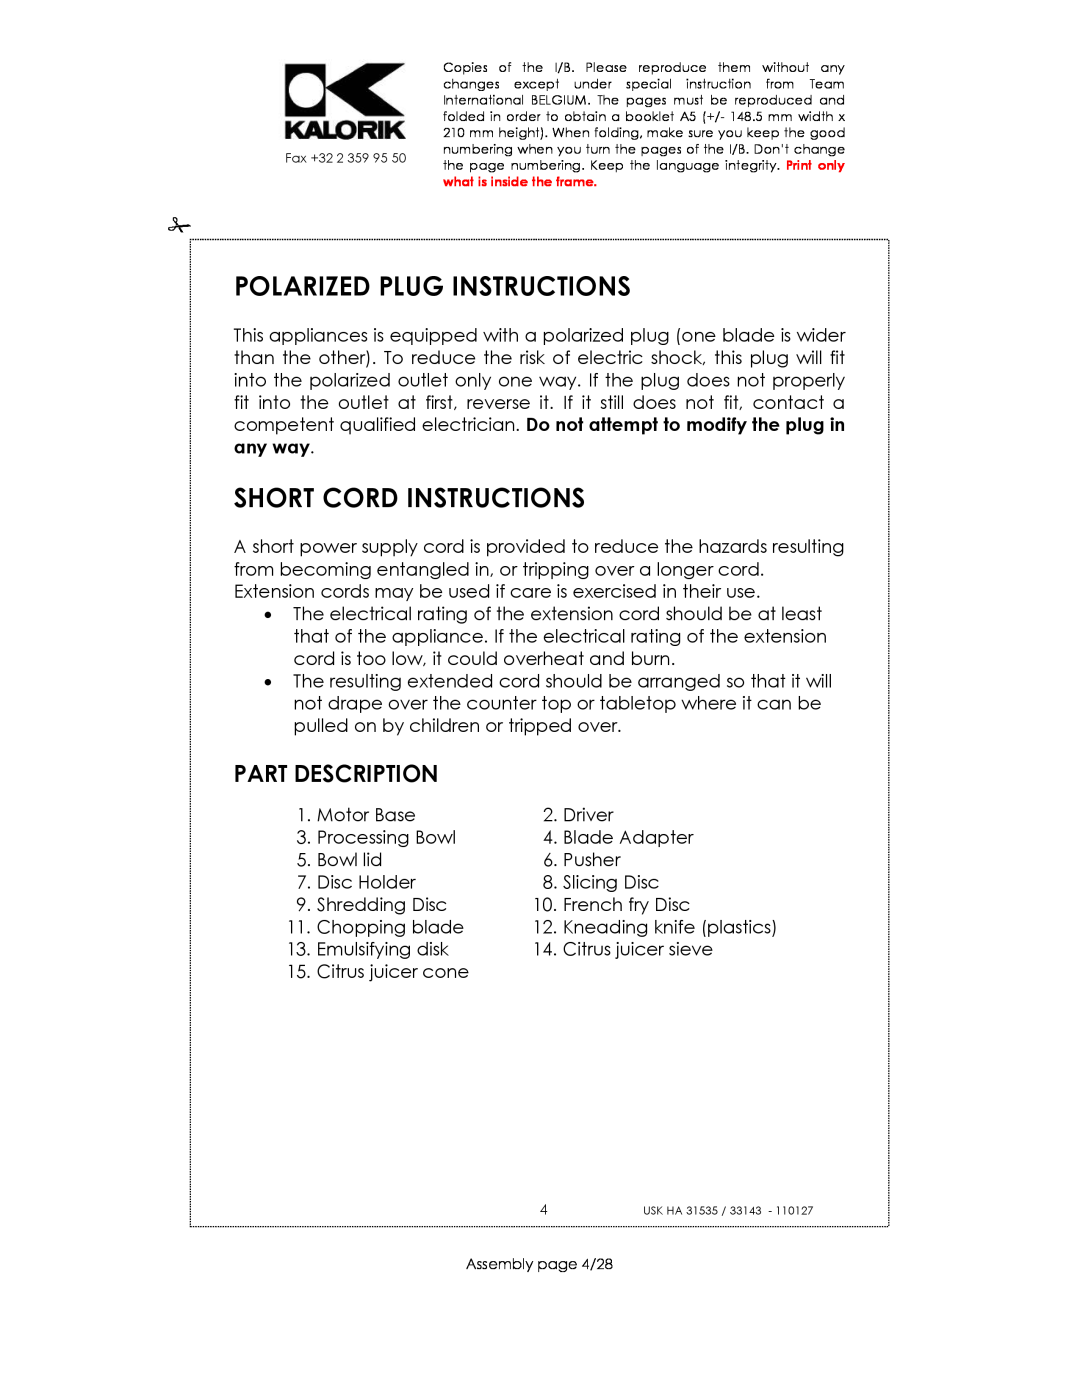 Kalorik USK HA 31535, USK HA 33143 manual Polarized Plug Instructions, Short Cord Instructions, Part Description 